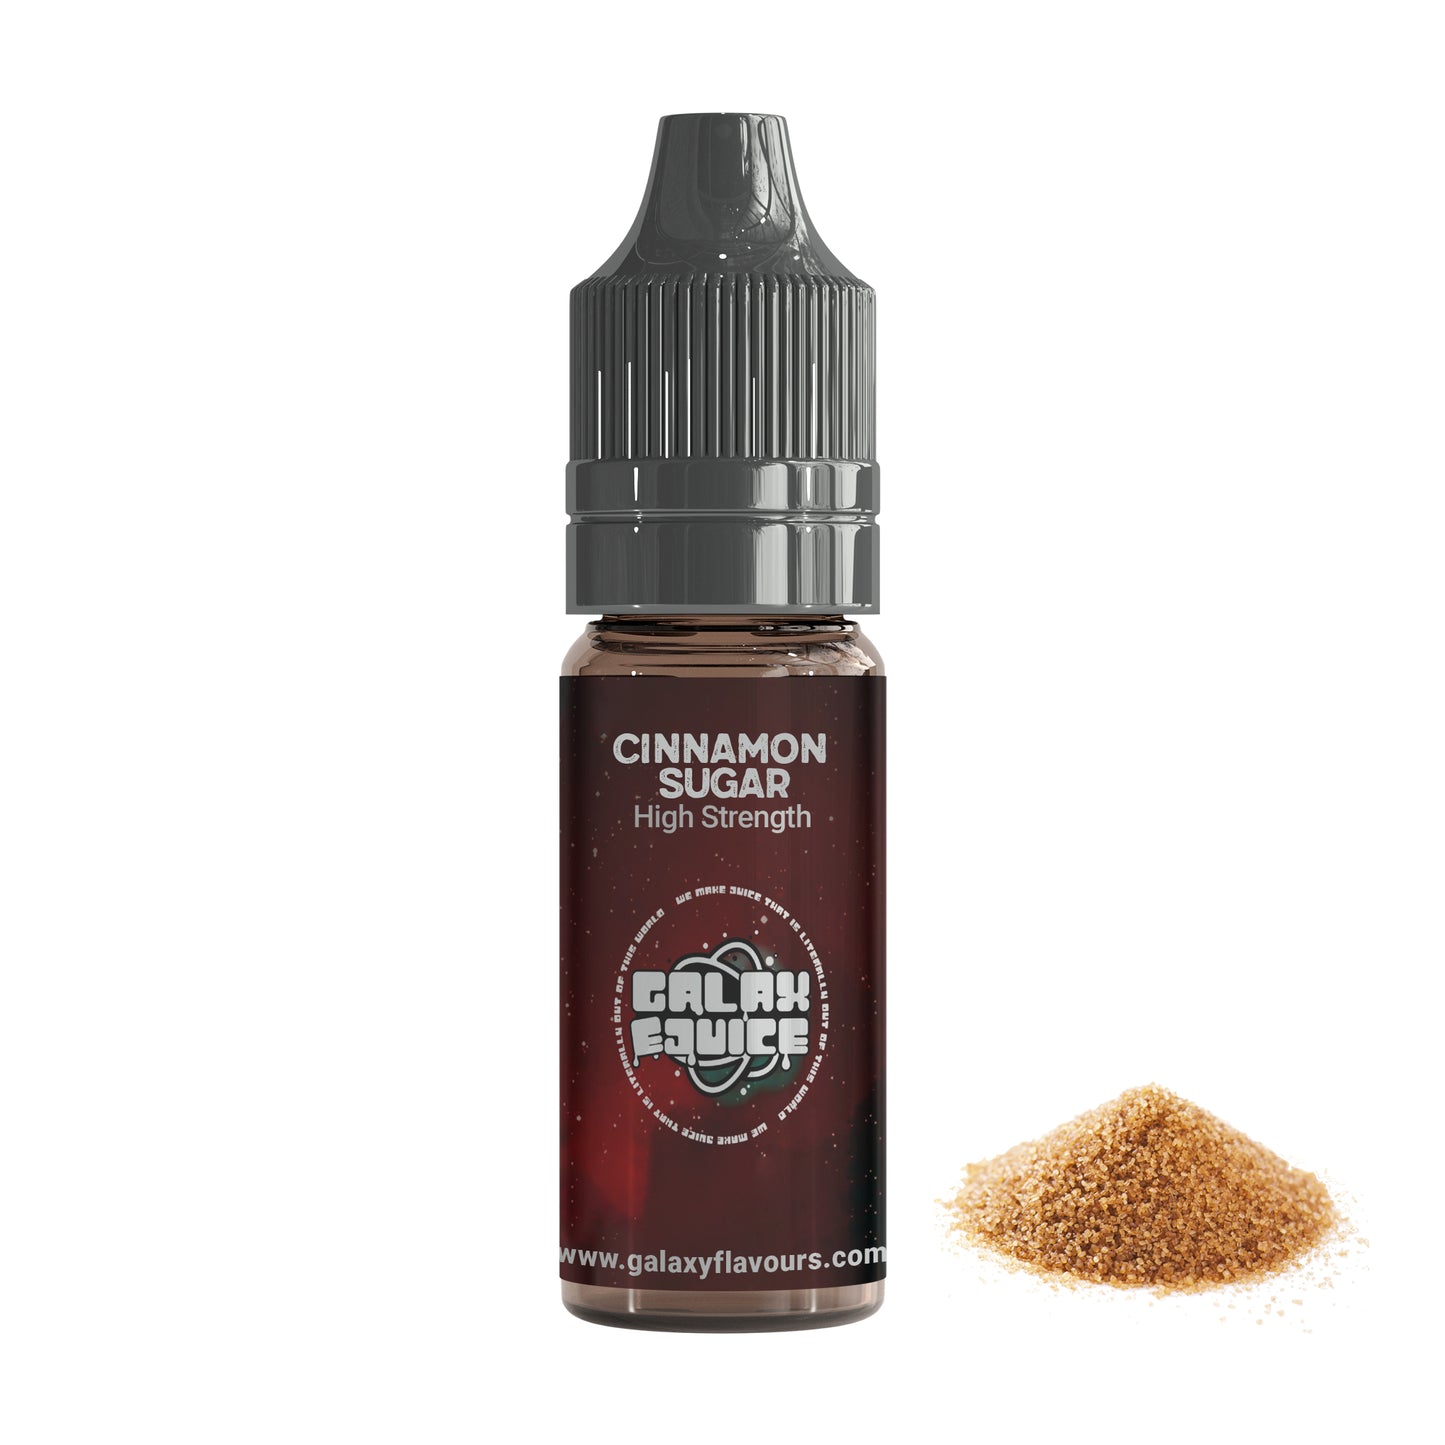 Cinnamon Sugar High Strength Professional Flavouring.